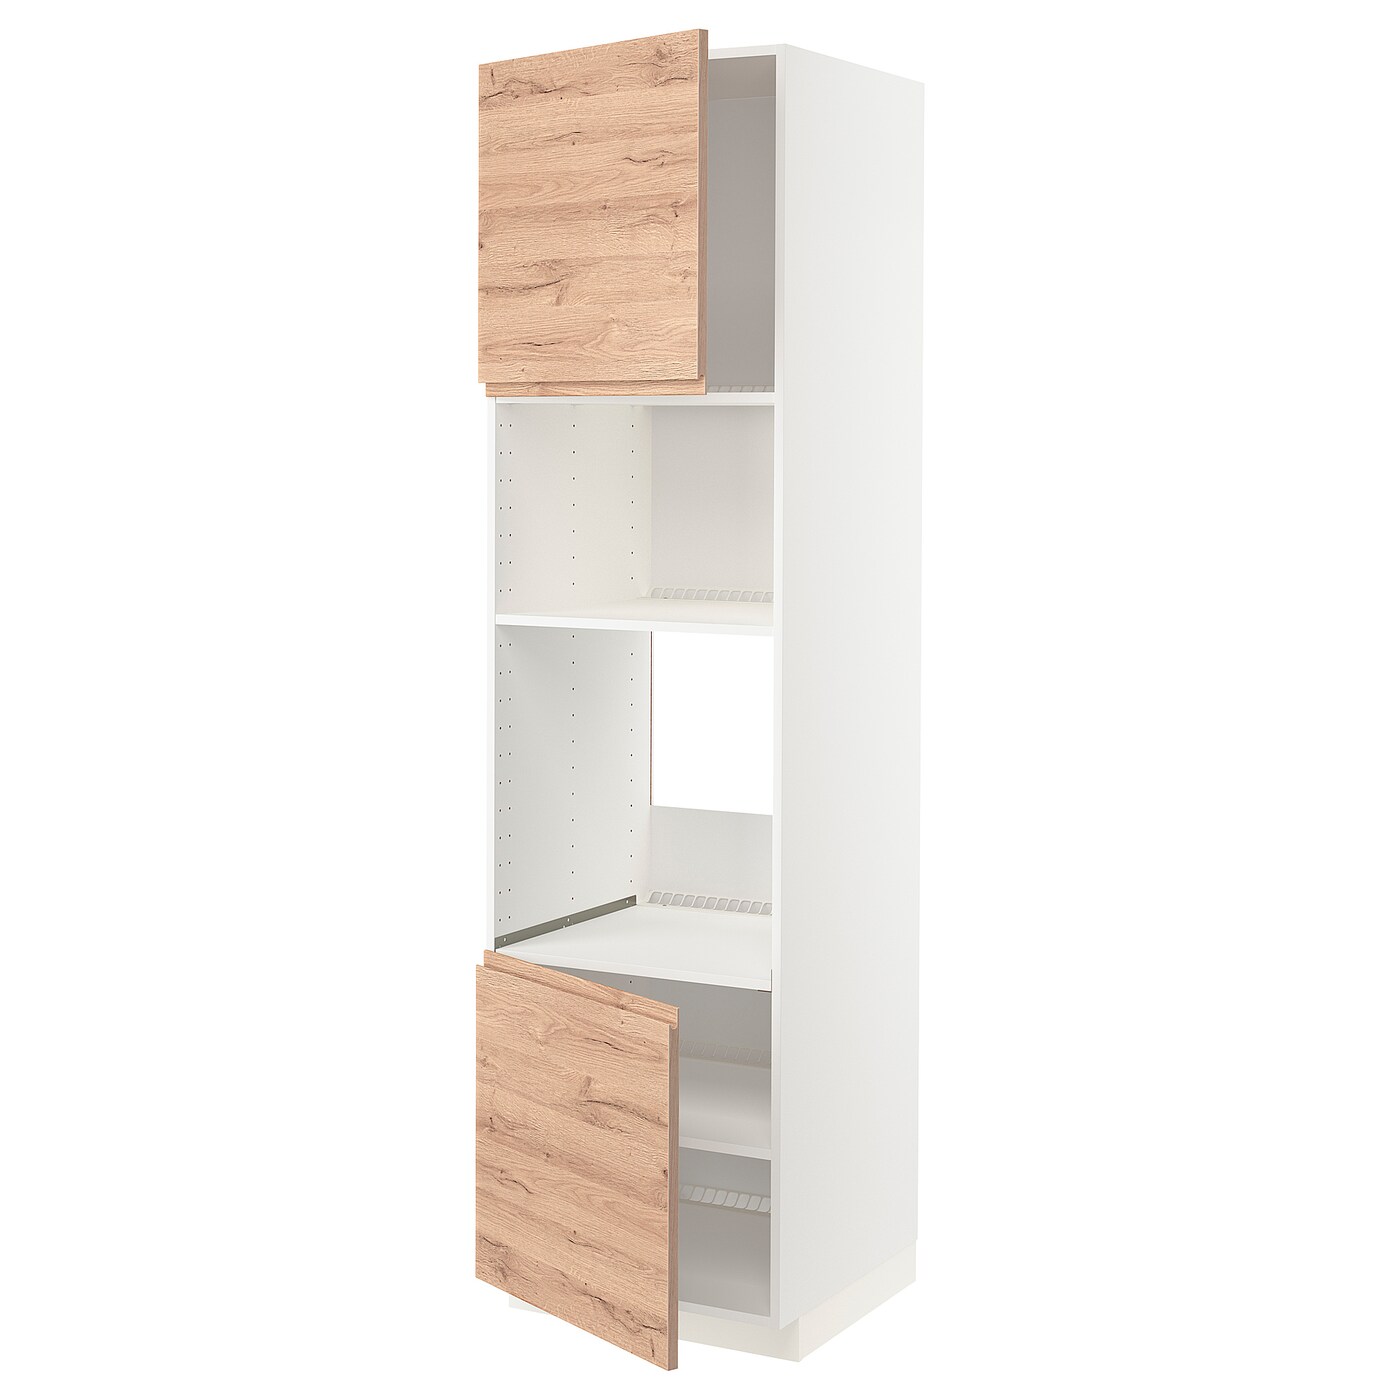 Высокий кухонный шкаф - IKEA METOD/МЕТОД ИКЕА, 220х60х60 см, белый/под беленый дуб